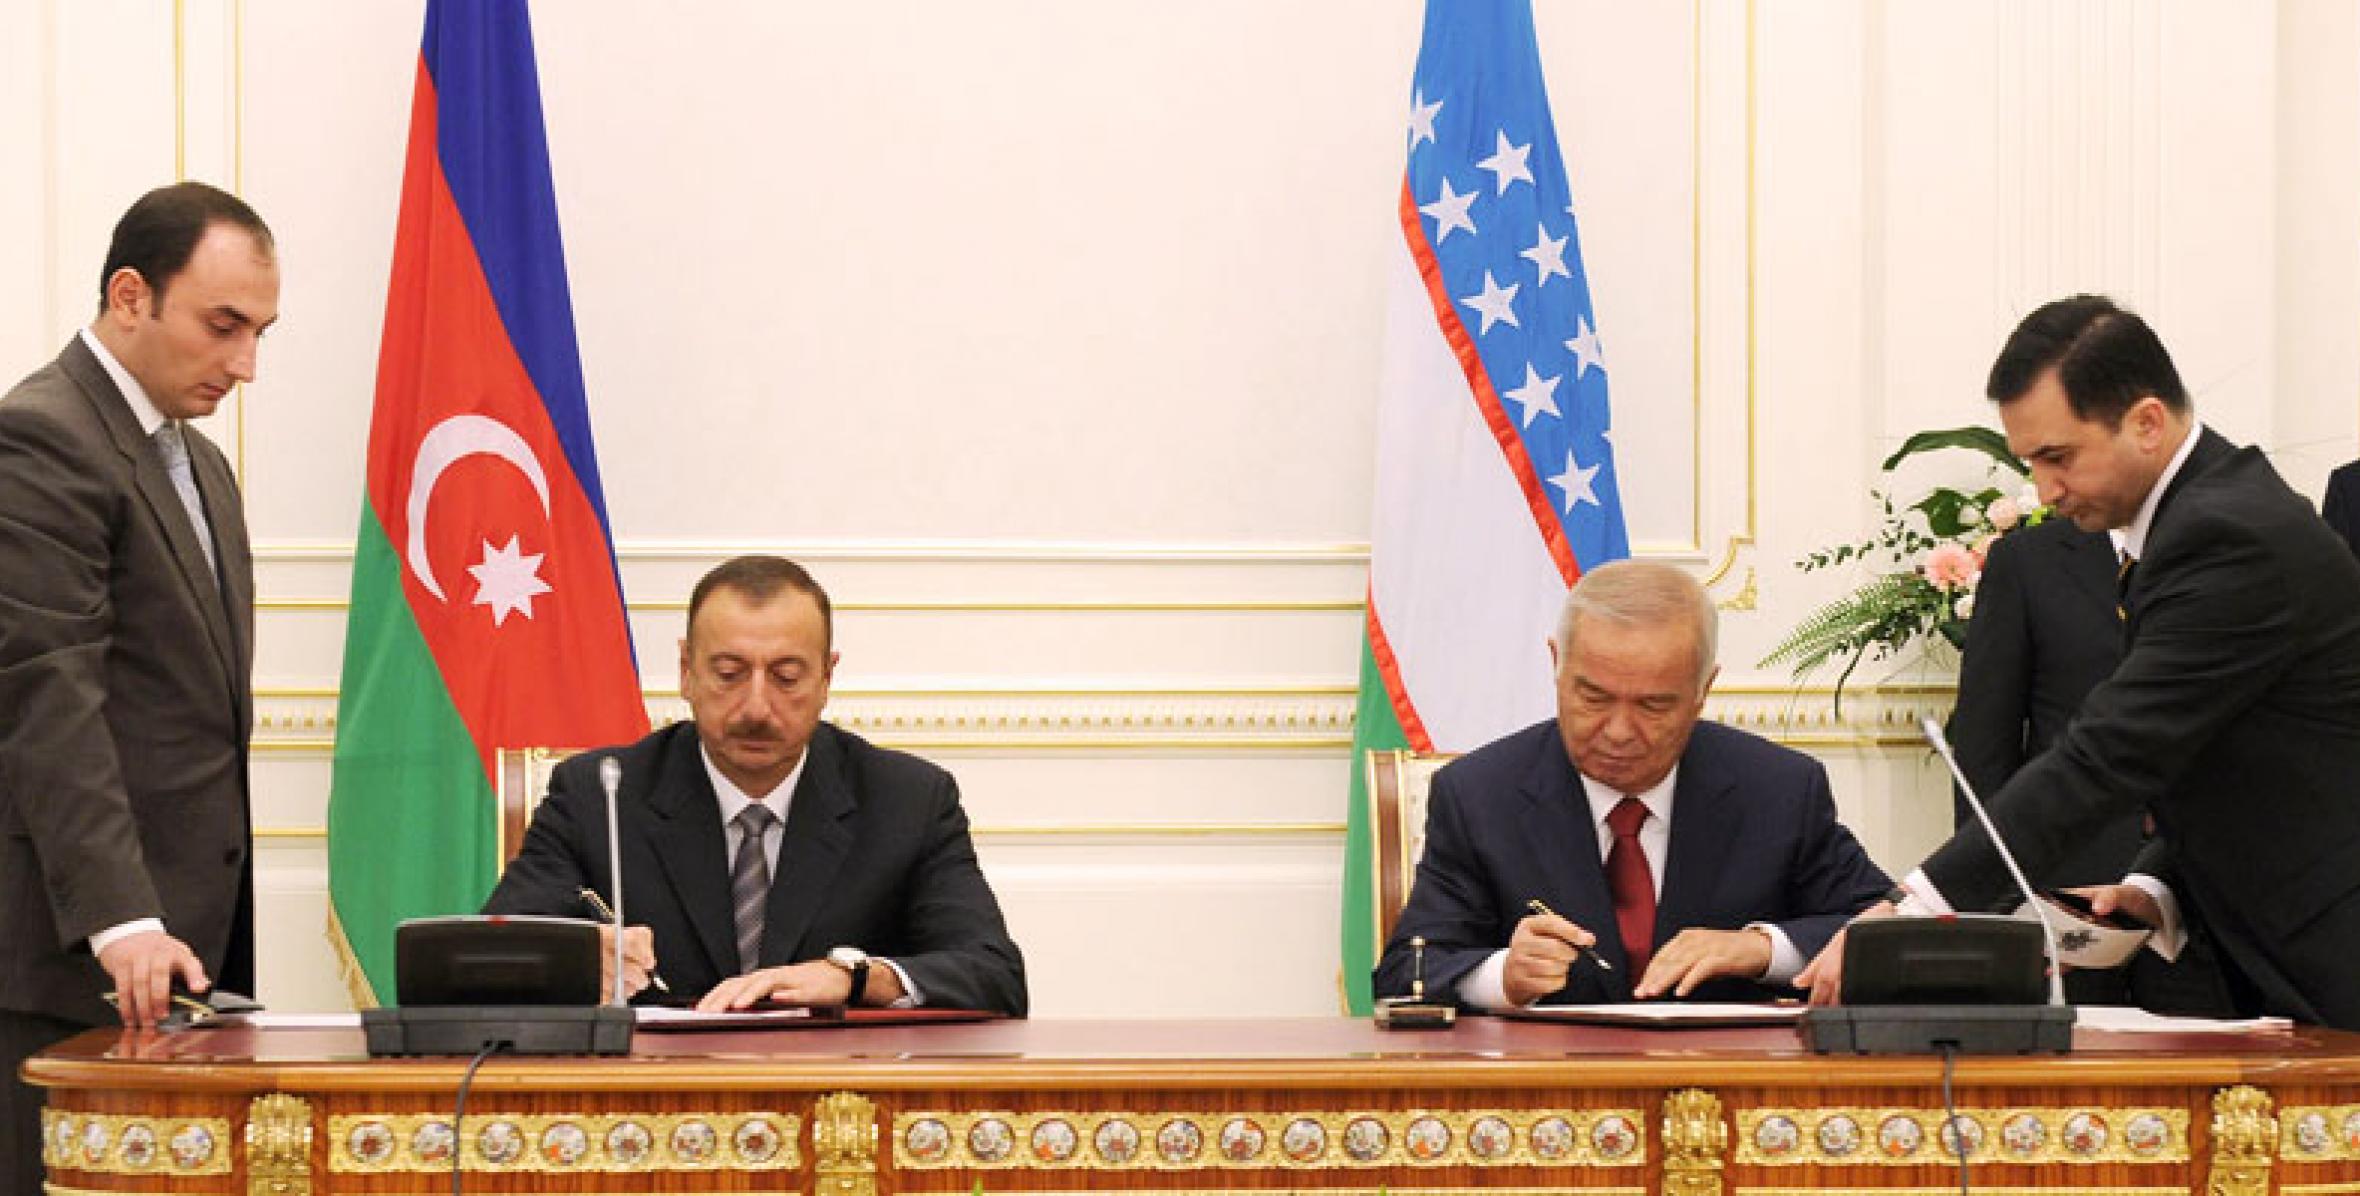 Document signing ceremony took place between Azerbaijan and Uzbekistan